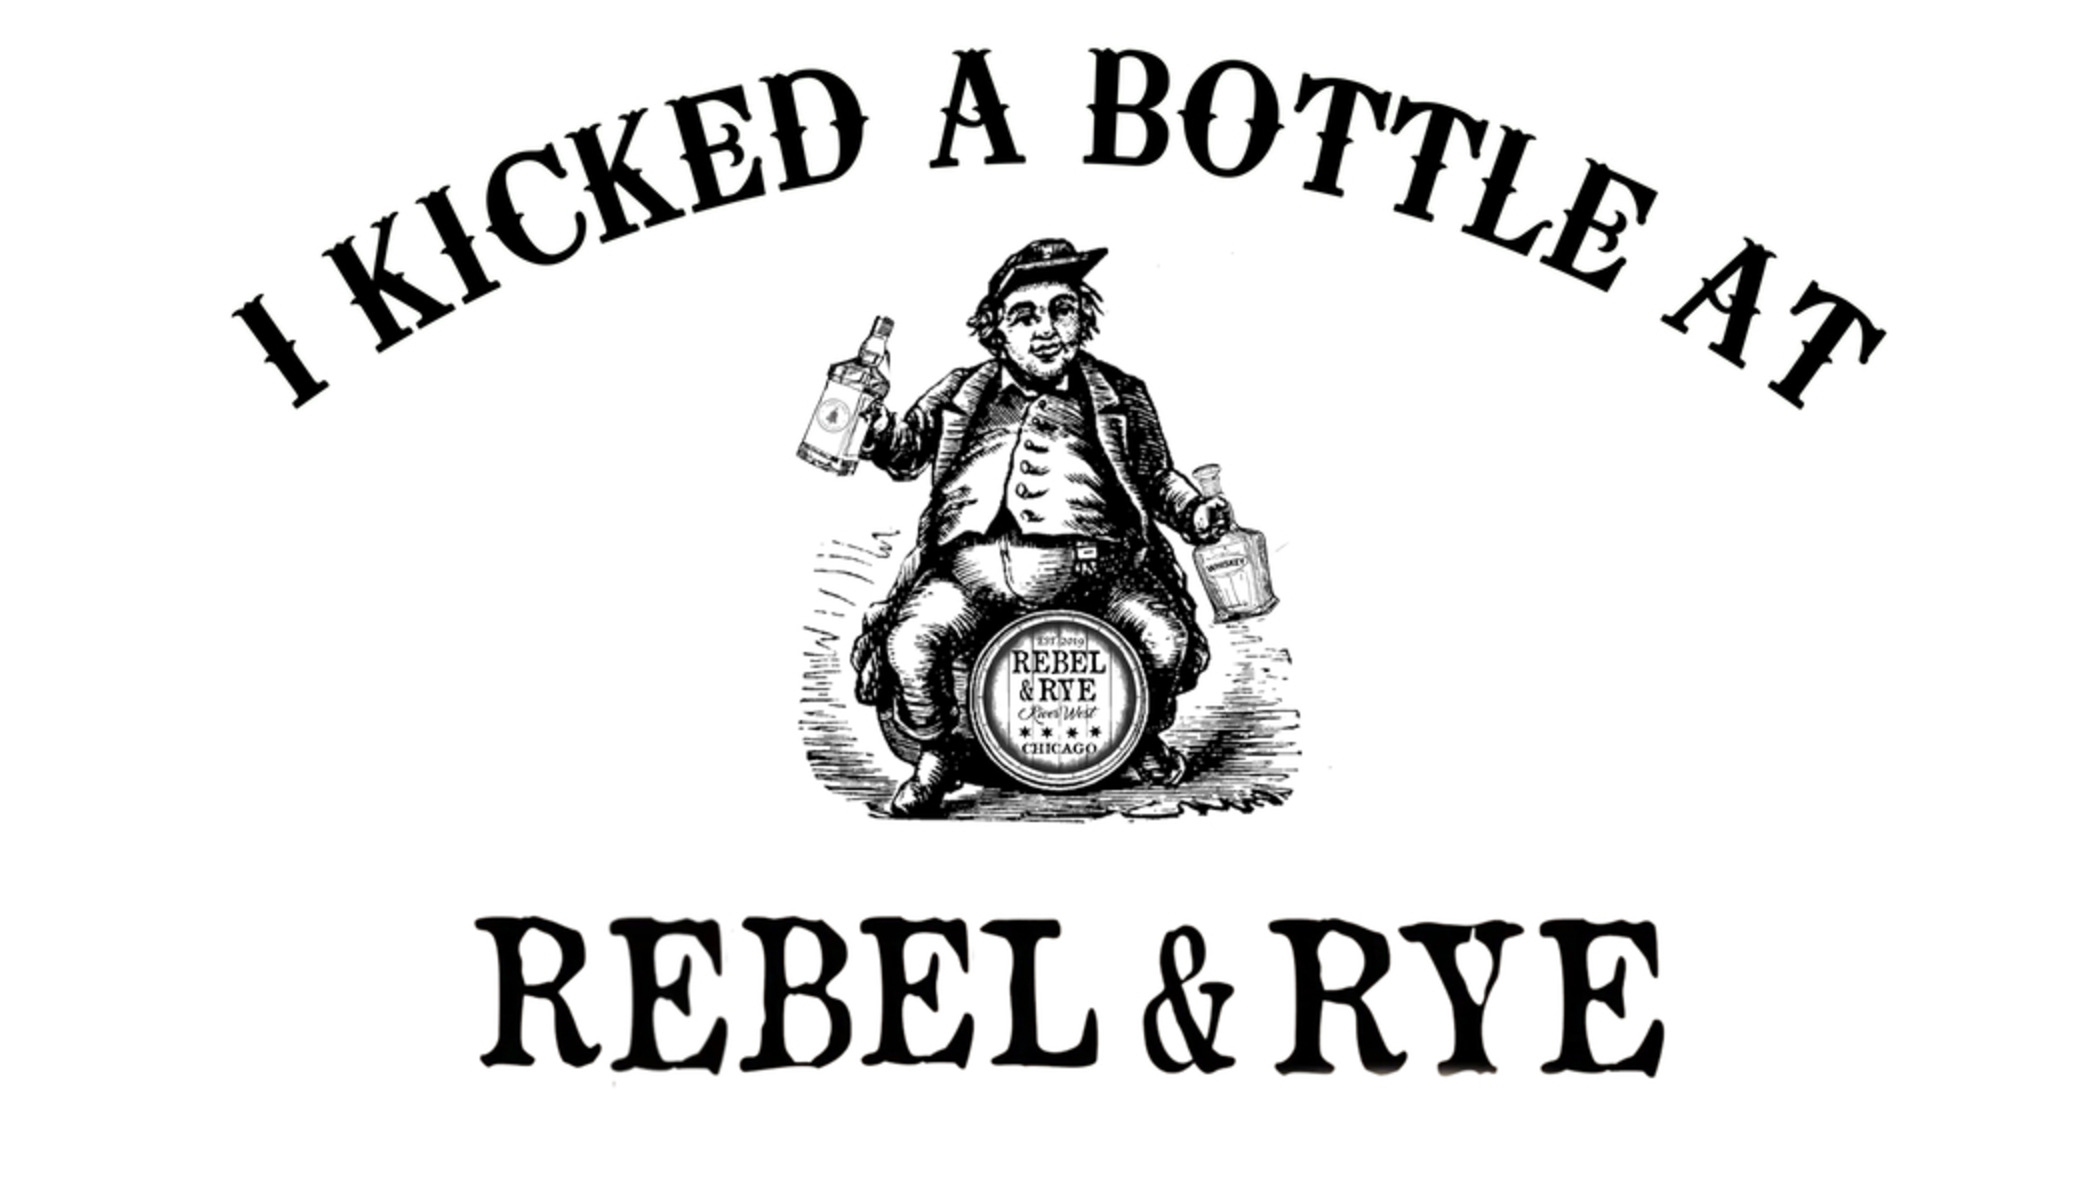 Rebel & Rye Kick a Bottle